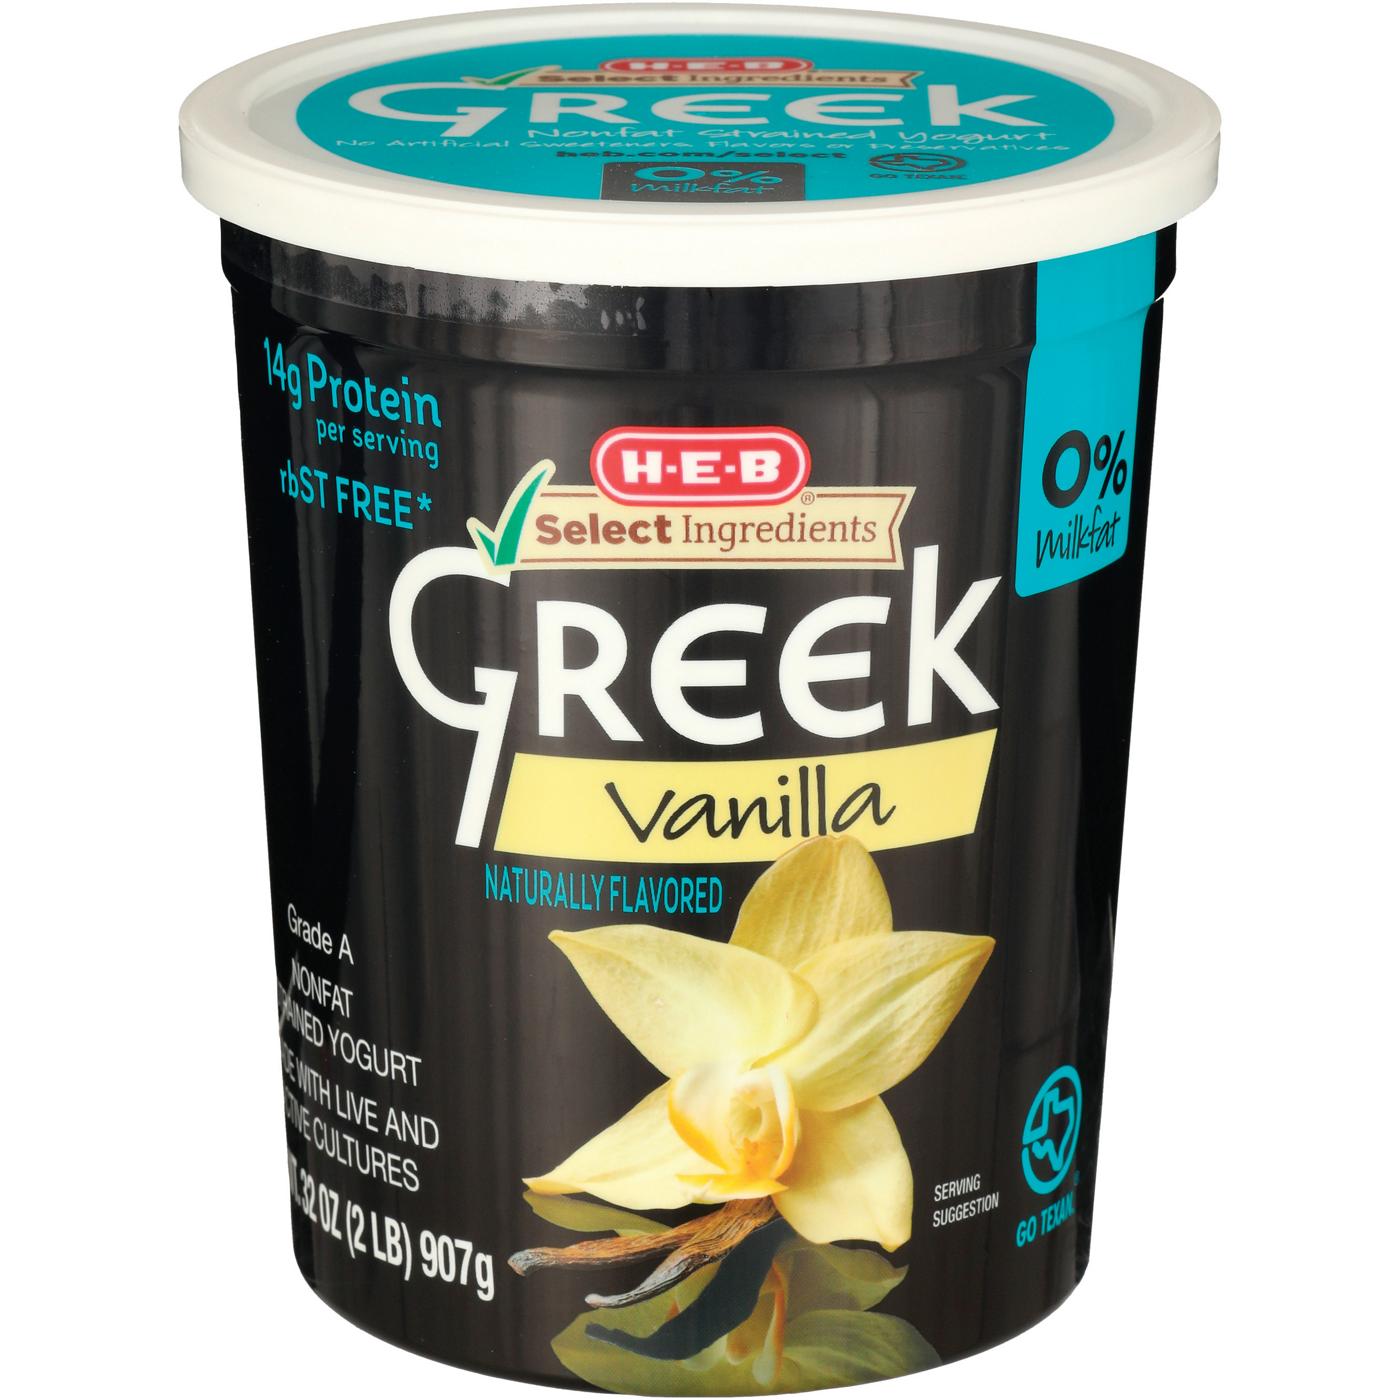 H-E-B 14g Protein Nonfat Greek Yogurt - Vanilla; image 1 of 2